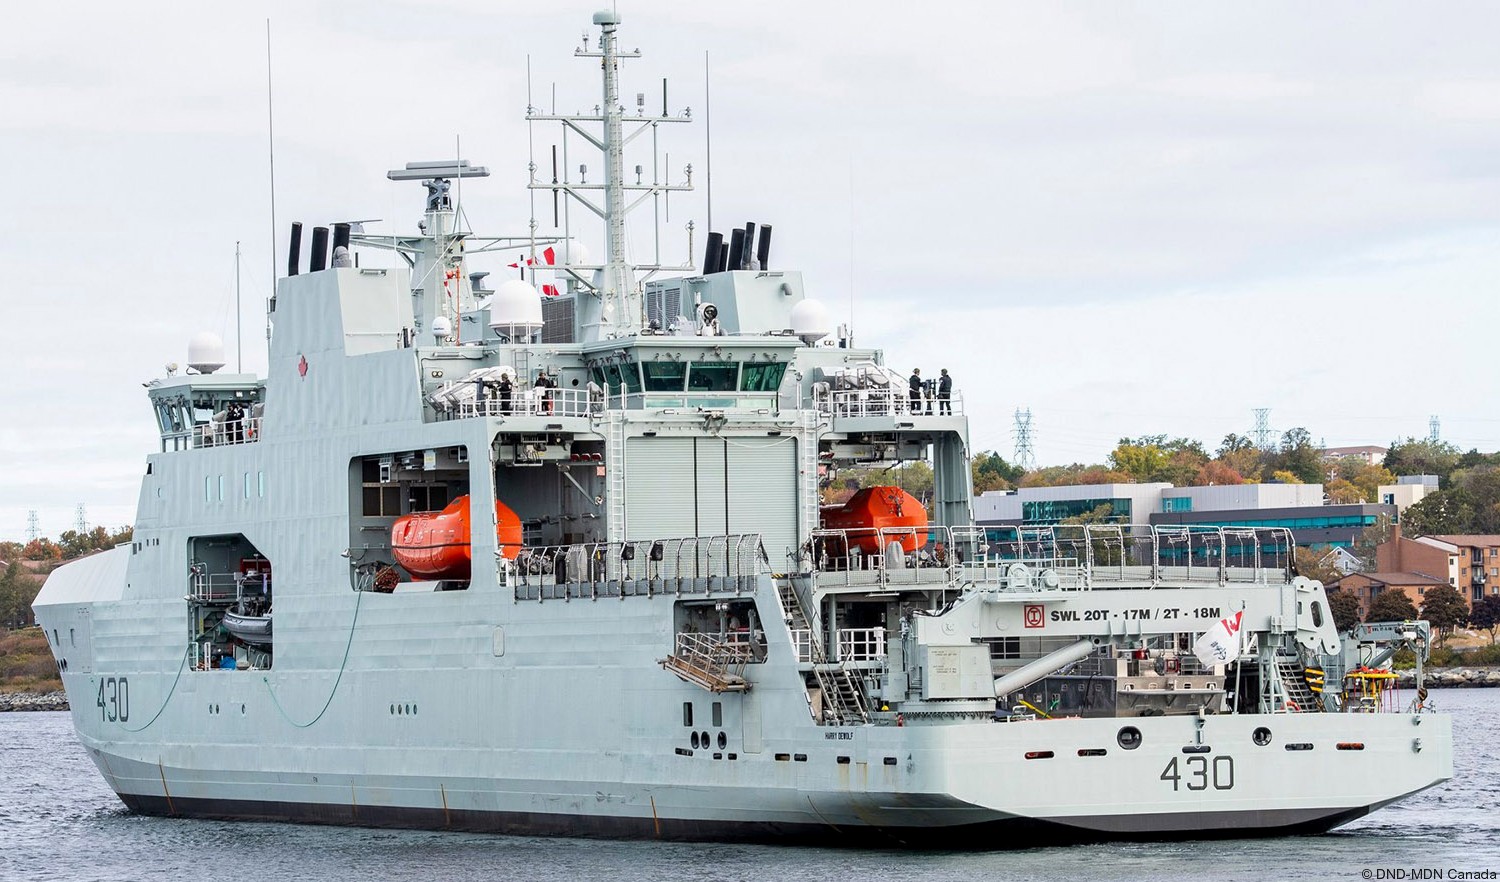 aopv-430 hmcs harry dewolf arctic offshore patrol vessel ncsm royal canadian navy 25